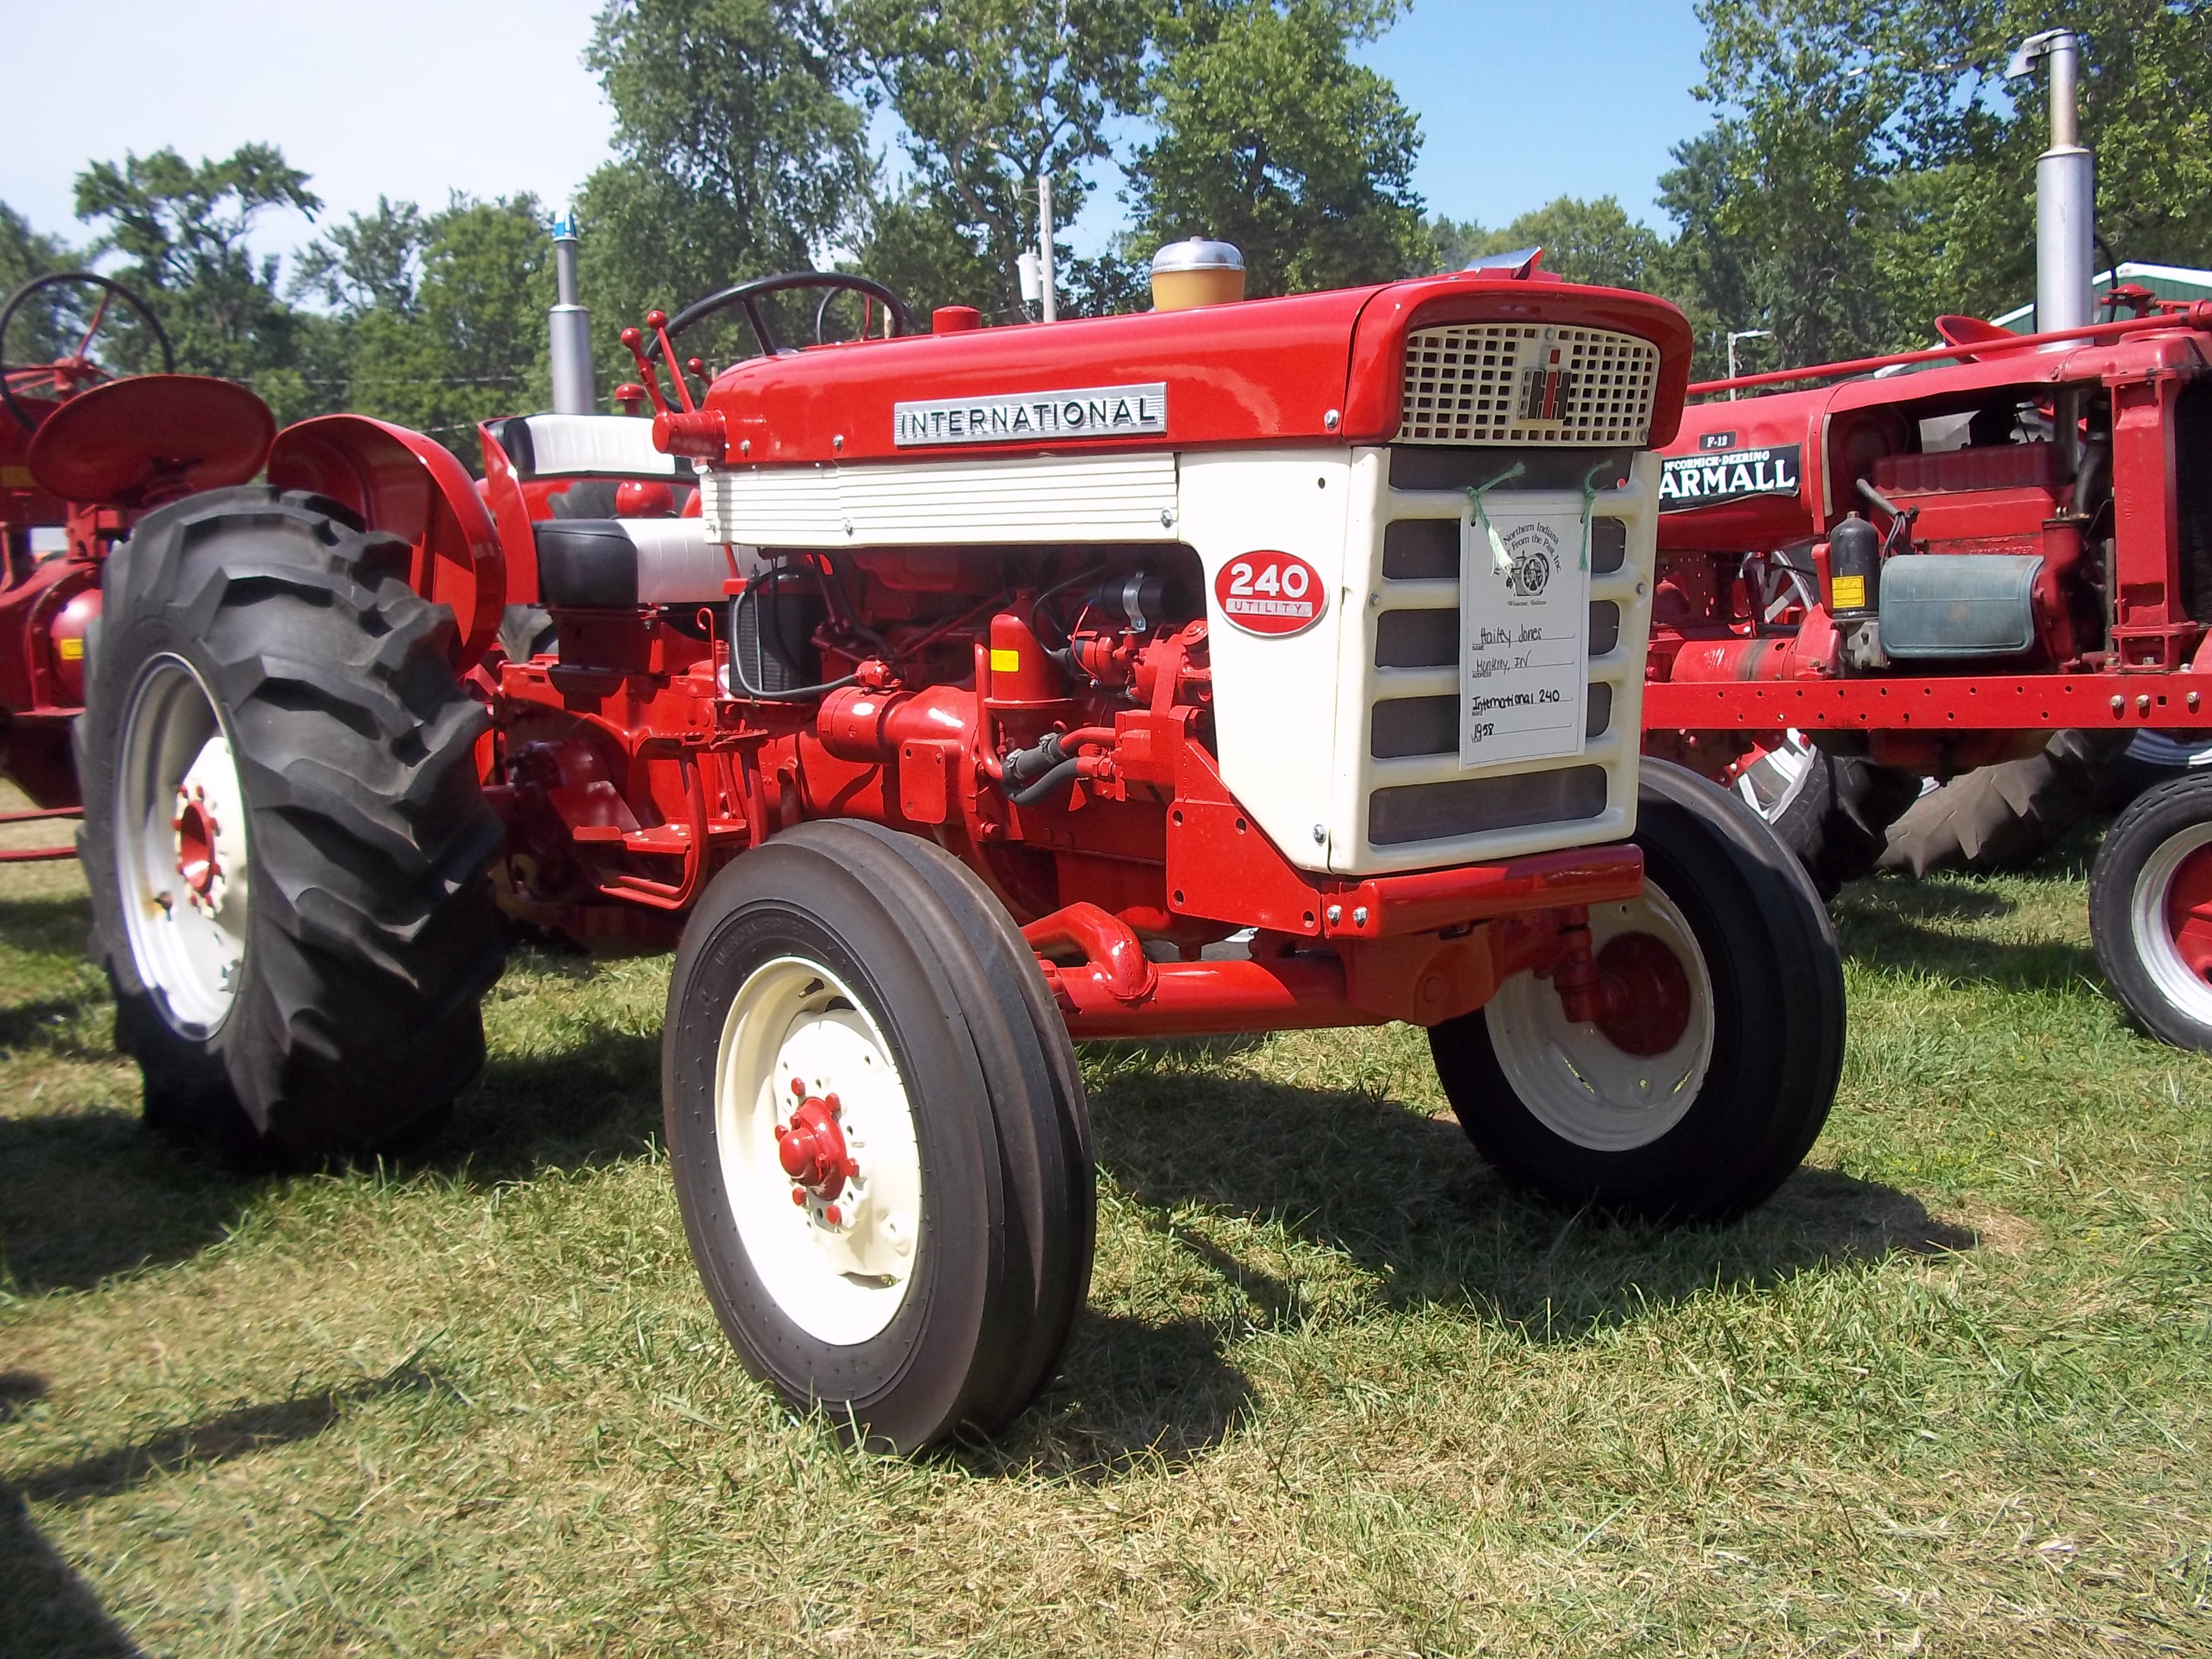 1958 International 240 | International Harvester | Pinterest